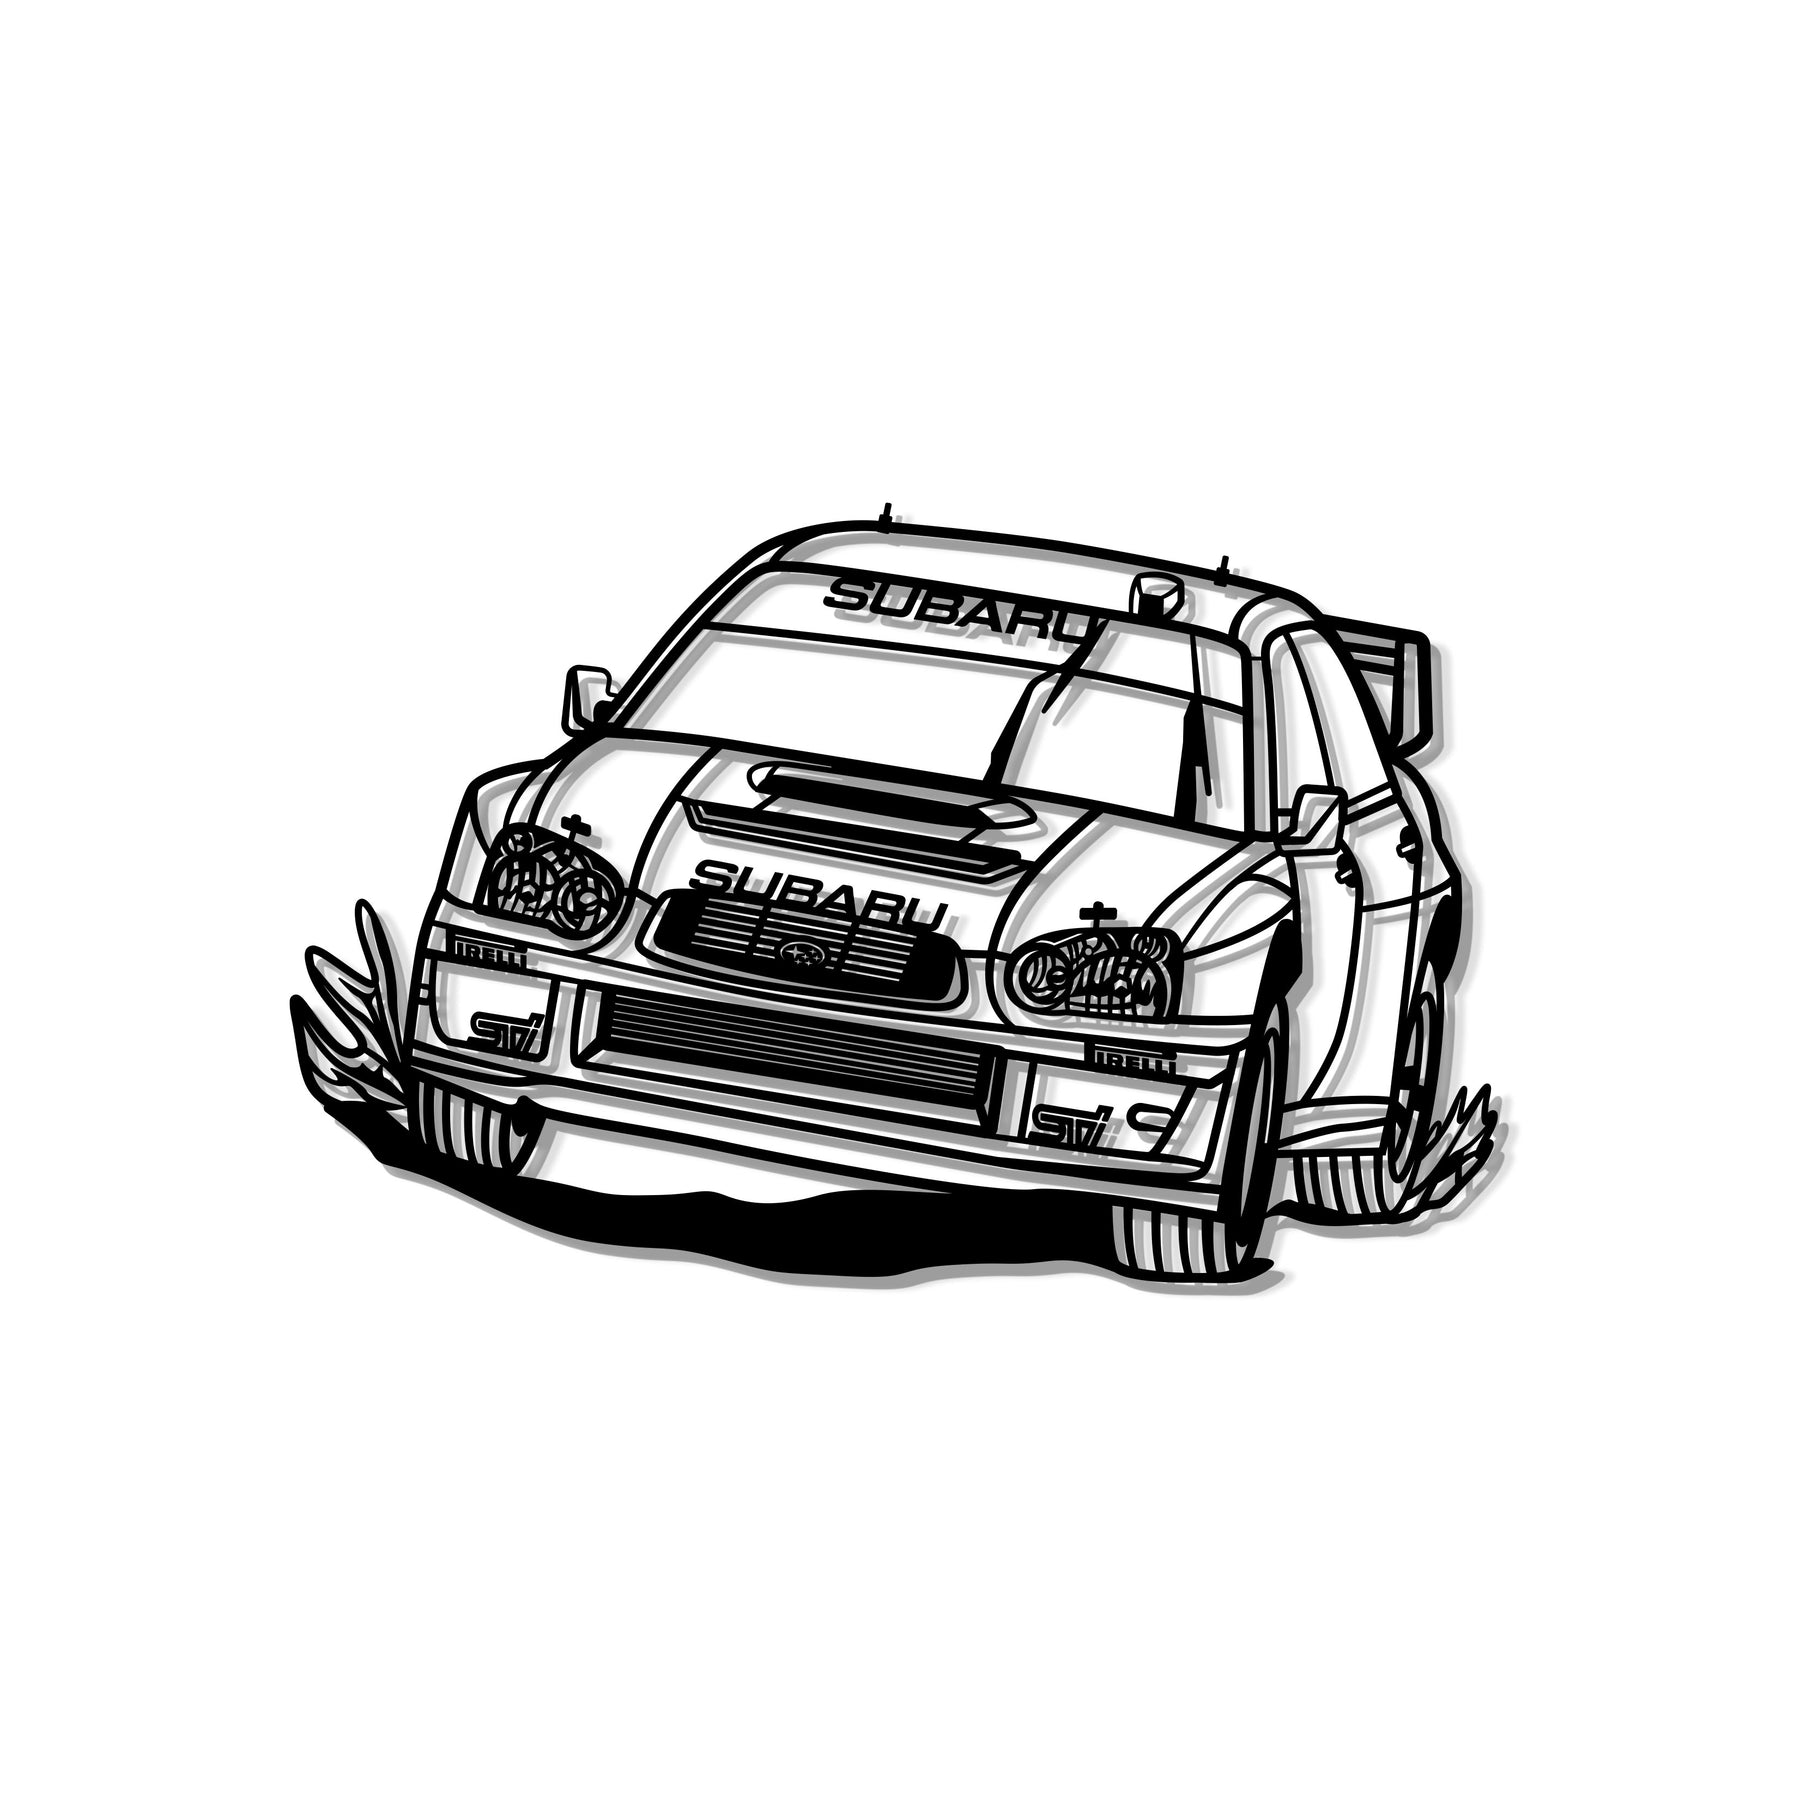 Impreza WRX STI Blobeye WRC Perspective Metal Car Wall Art - MT1190